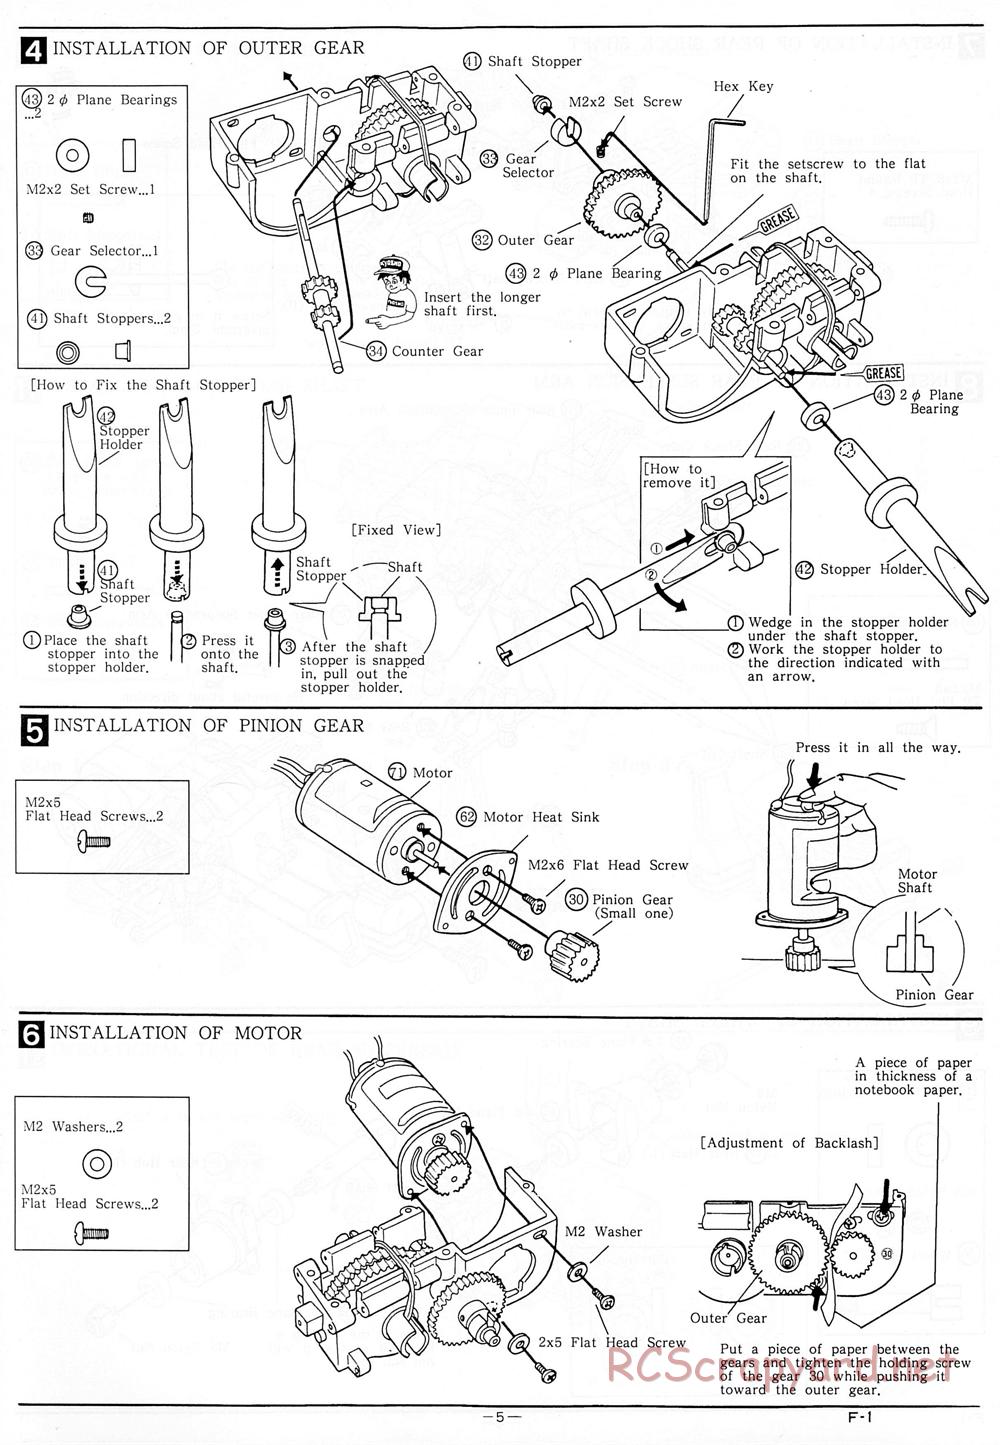 Kyosho - 1/18 Scale Formula One (F1) - Manual - Page 5